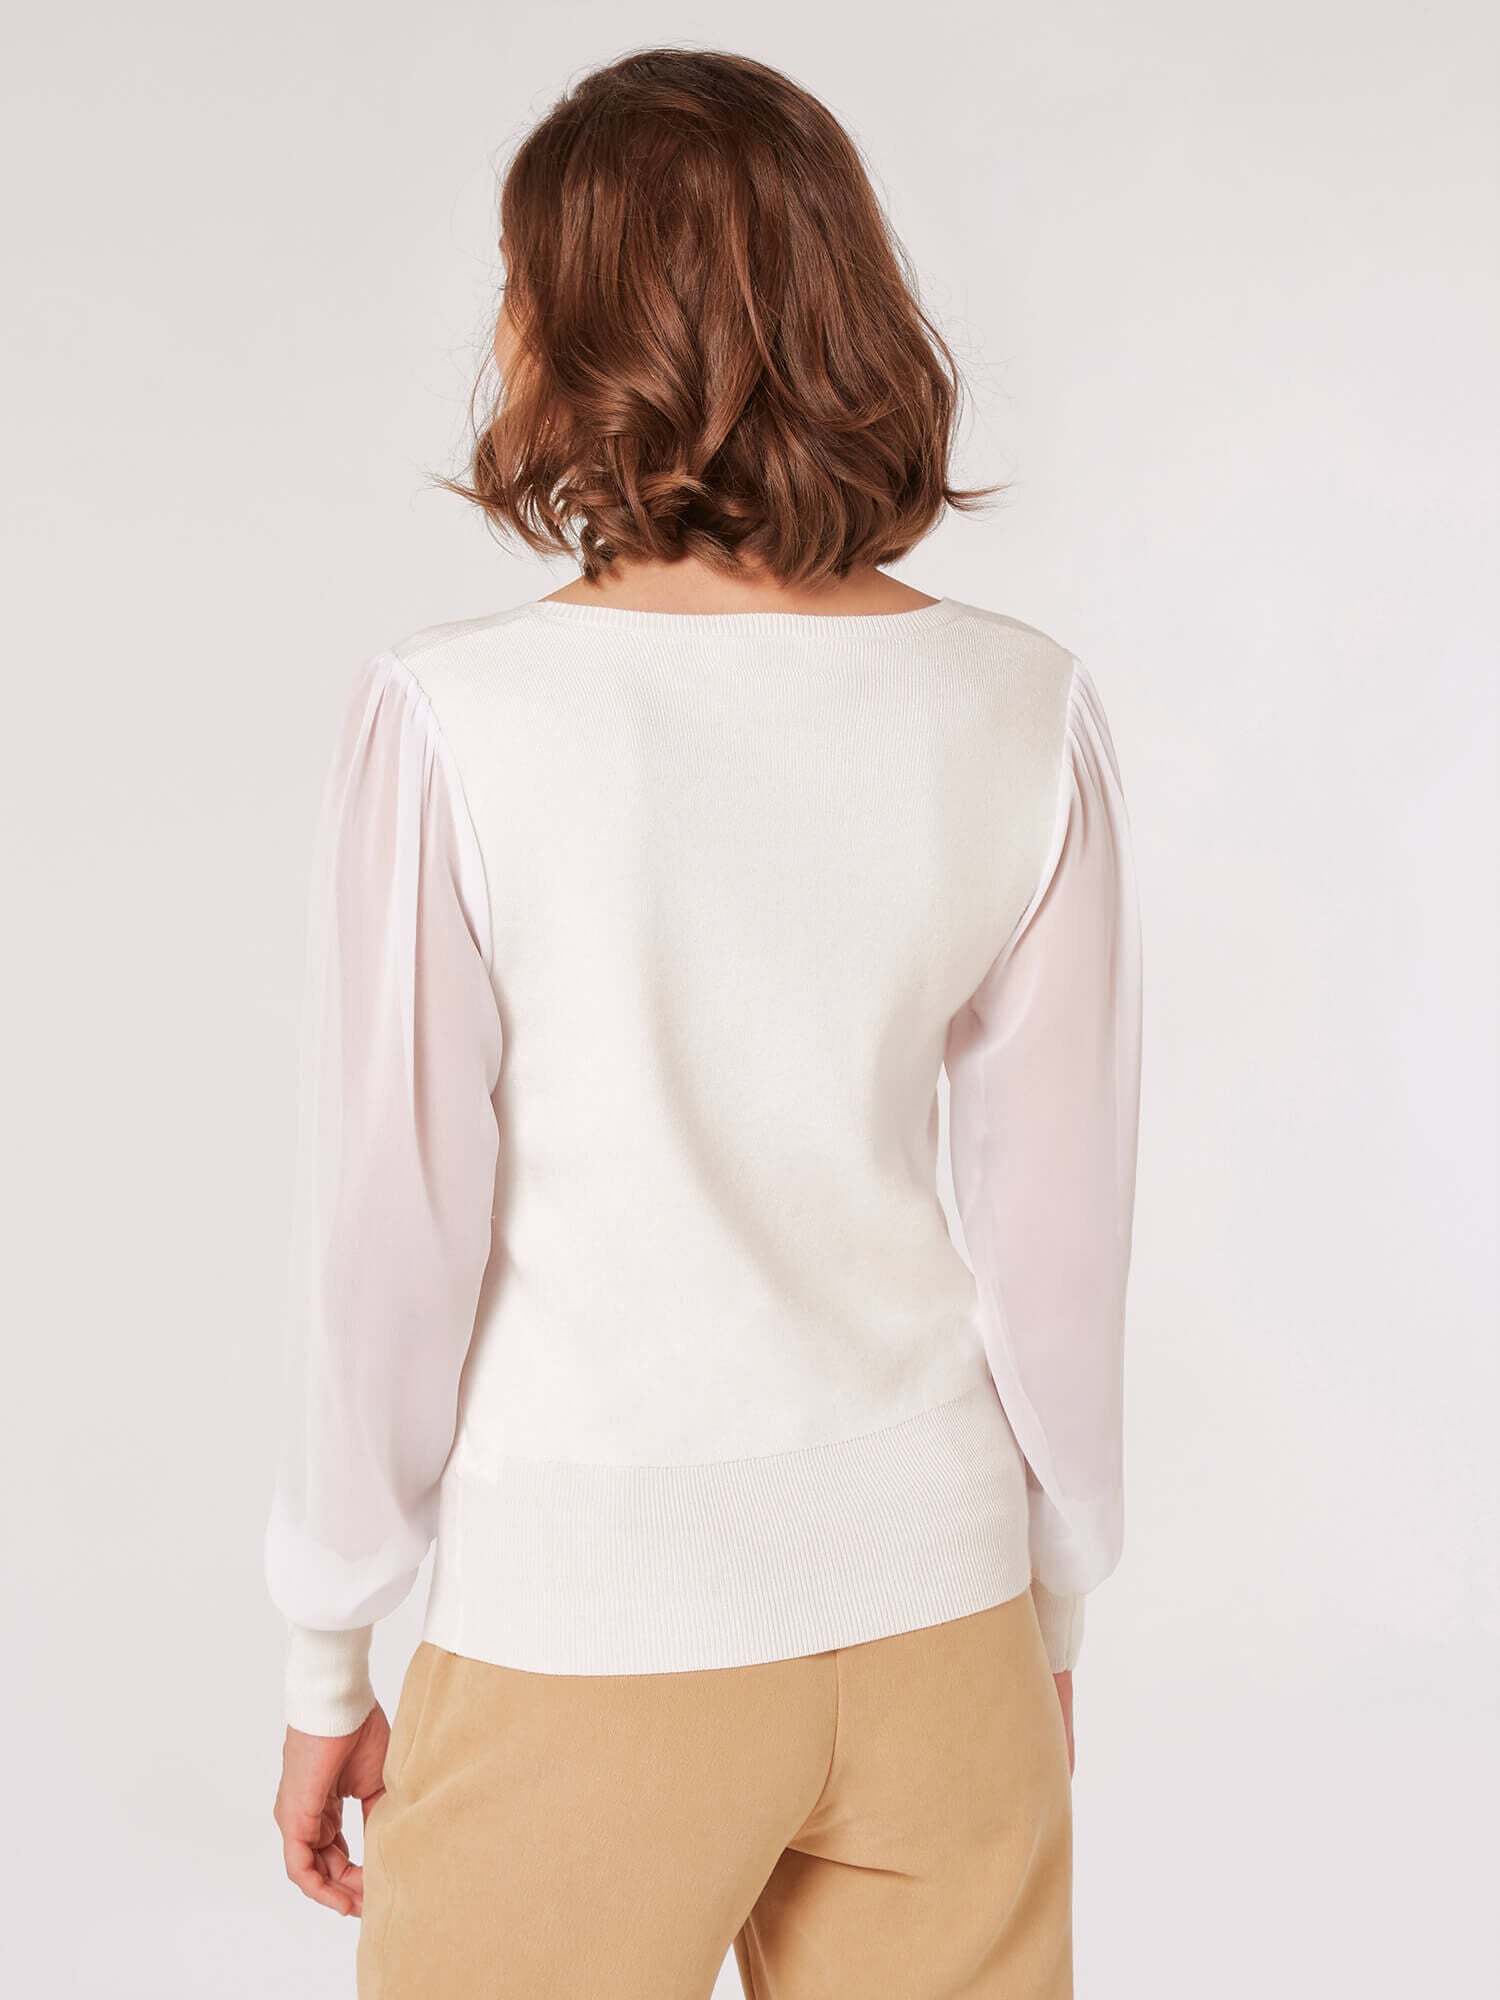 Sale Chiffon Sleeve Square Neck Sweater White